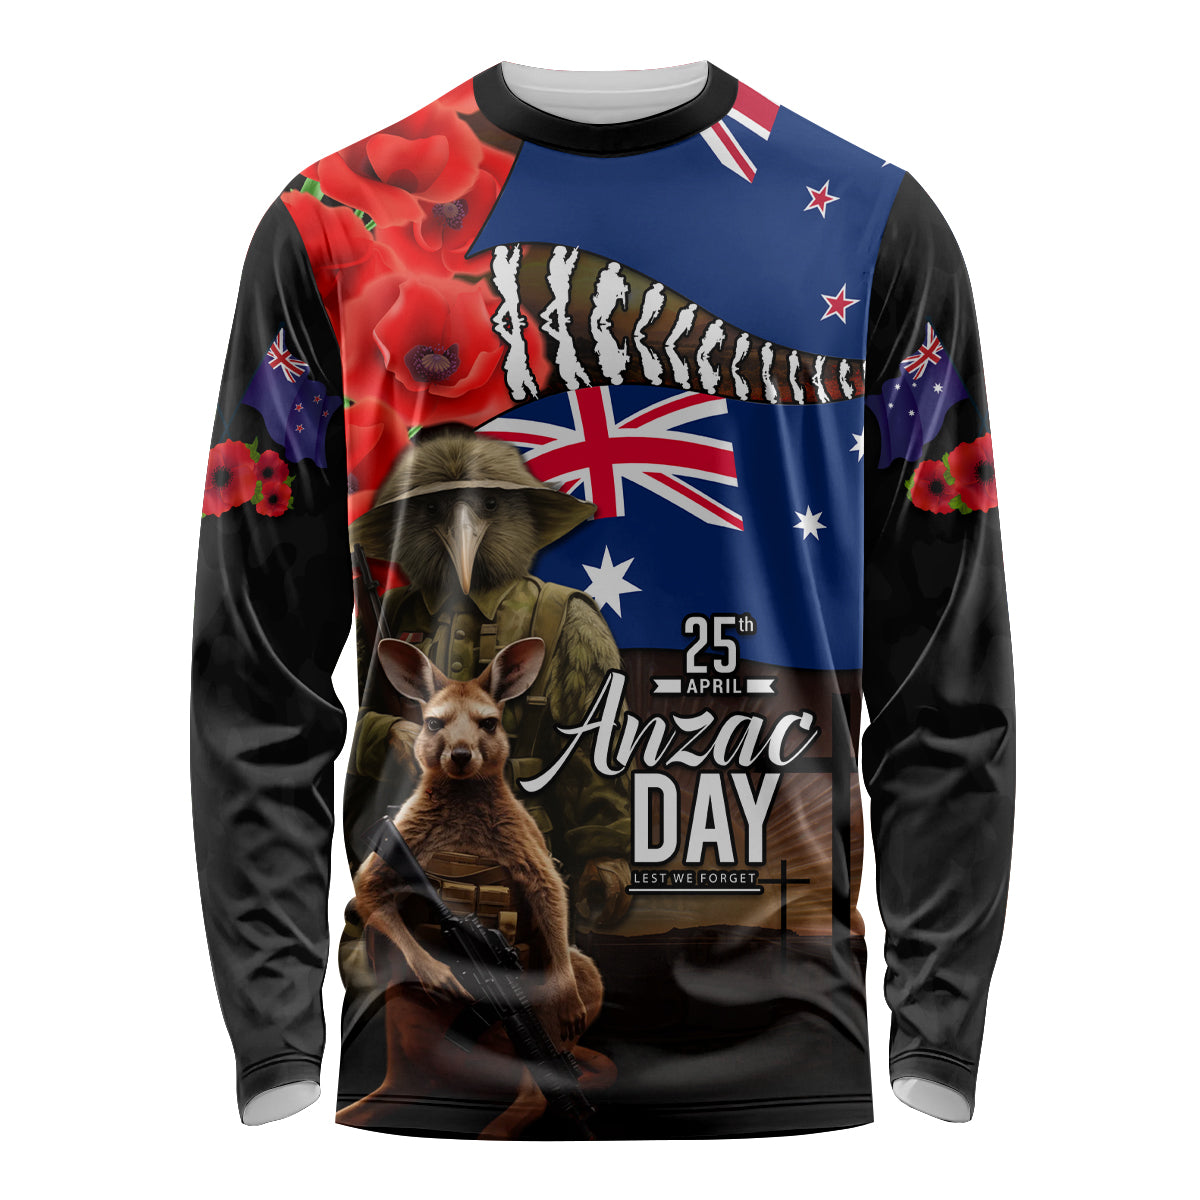 New Zealand and Australia ANZAC Day Long Sleeve Shirt National Flag mix Kiwi Bird and Kangaroo Soldier Style